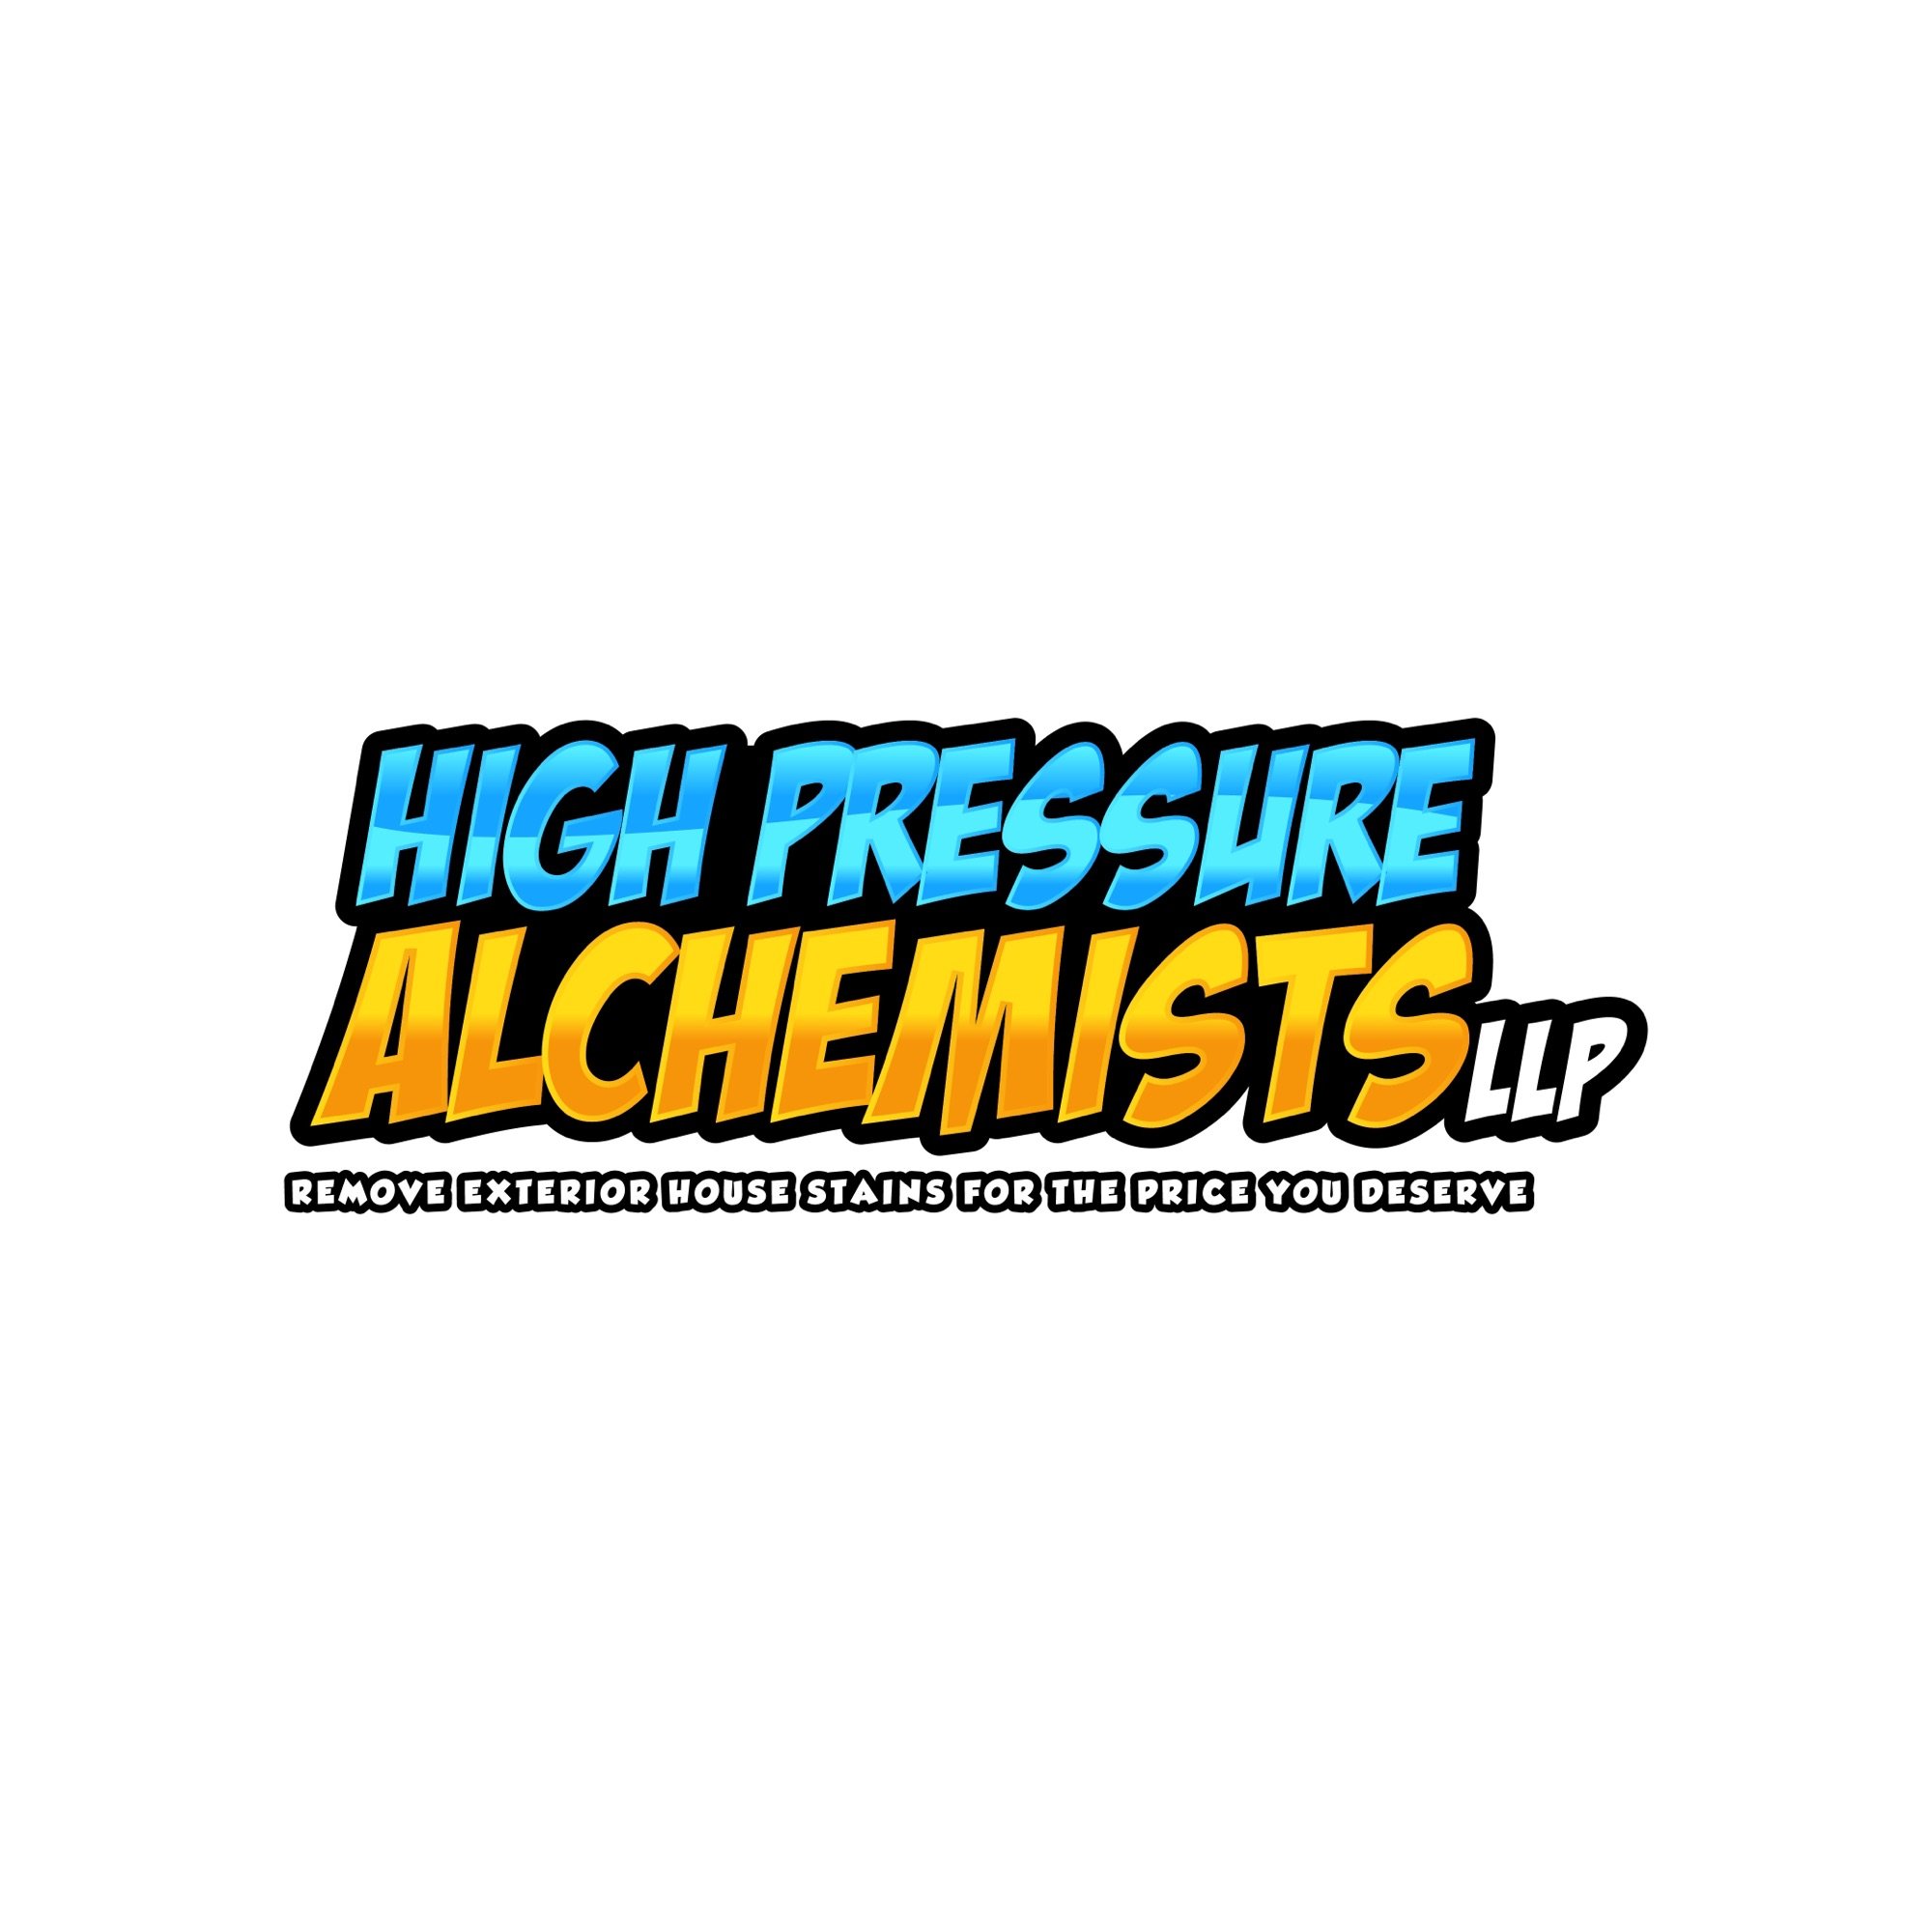 High Pressure Alchemists Logo